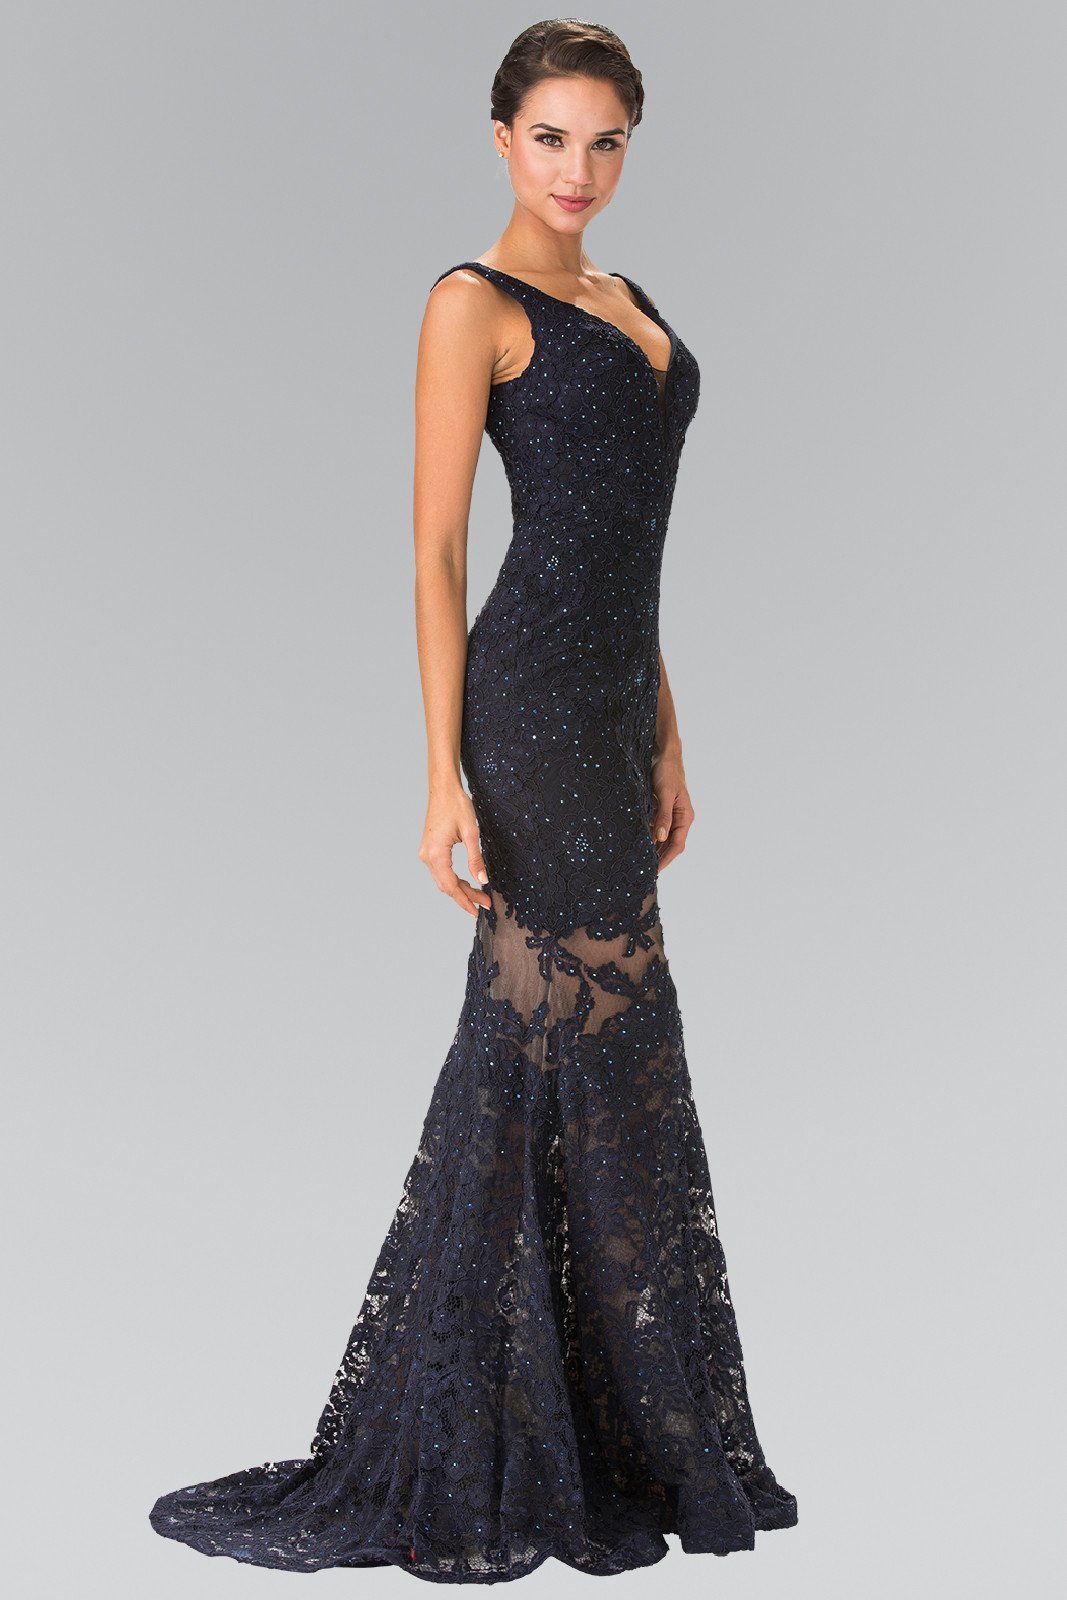 Long Sleeveless Illusion Cutout Lace Dress by Elizabeth K GL2249-Long Formal Dresses-ABC Fashion